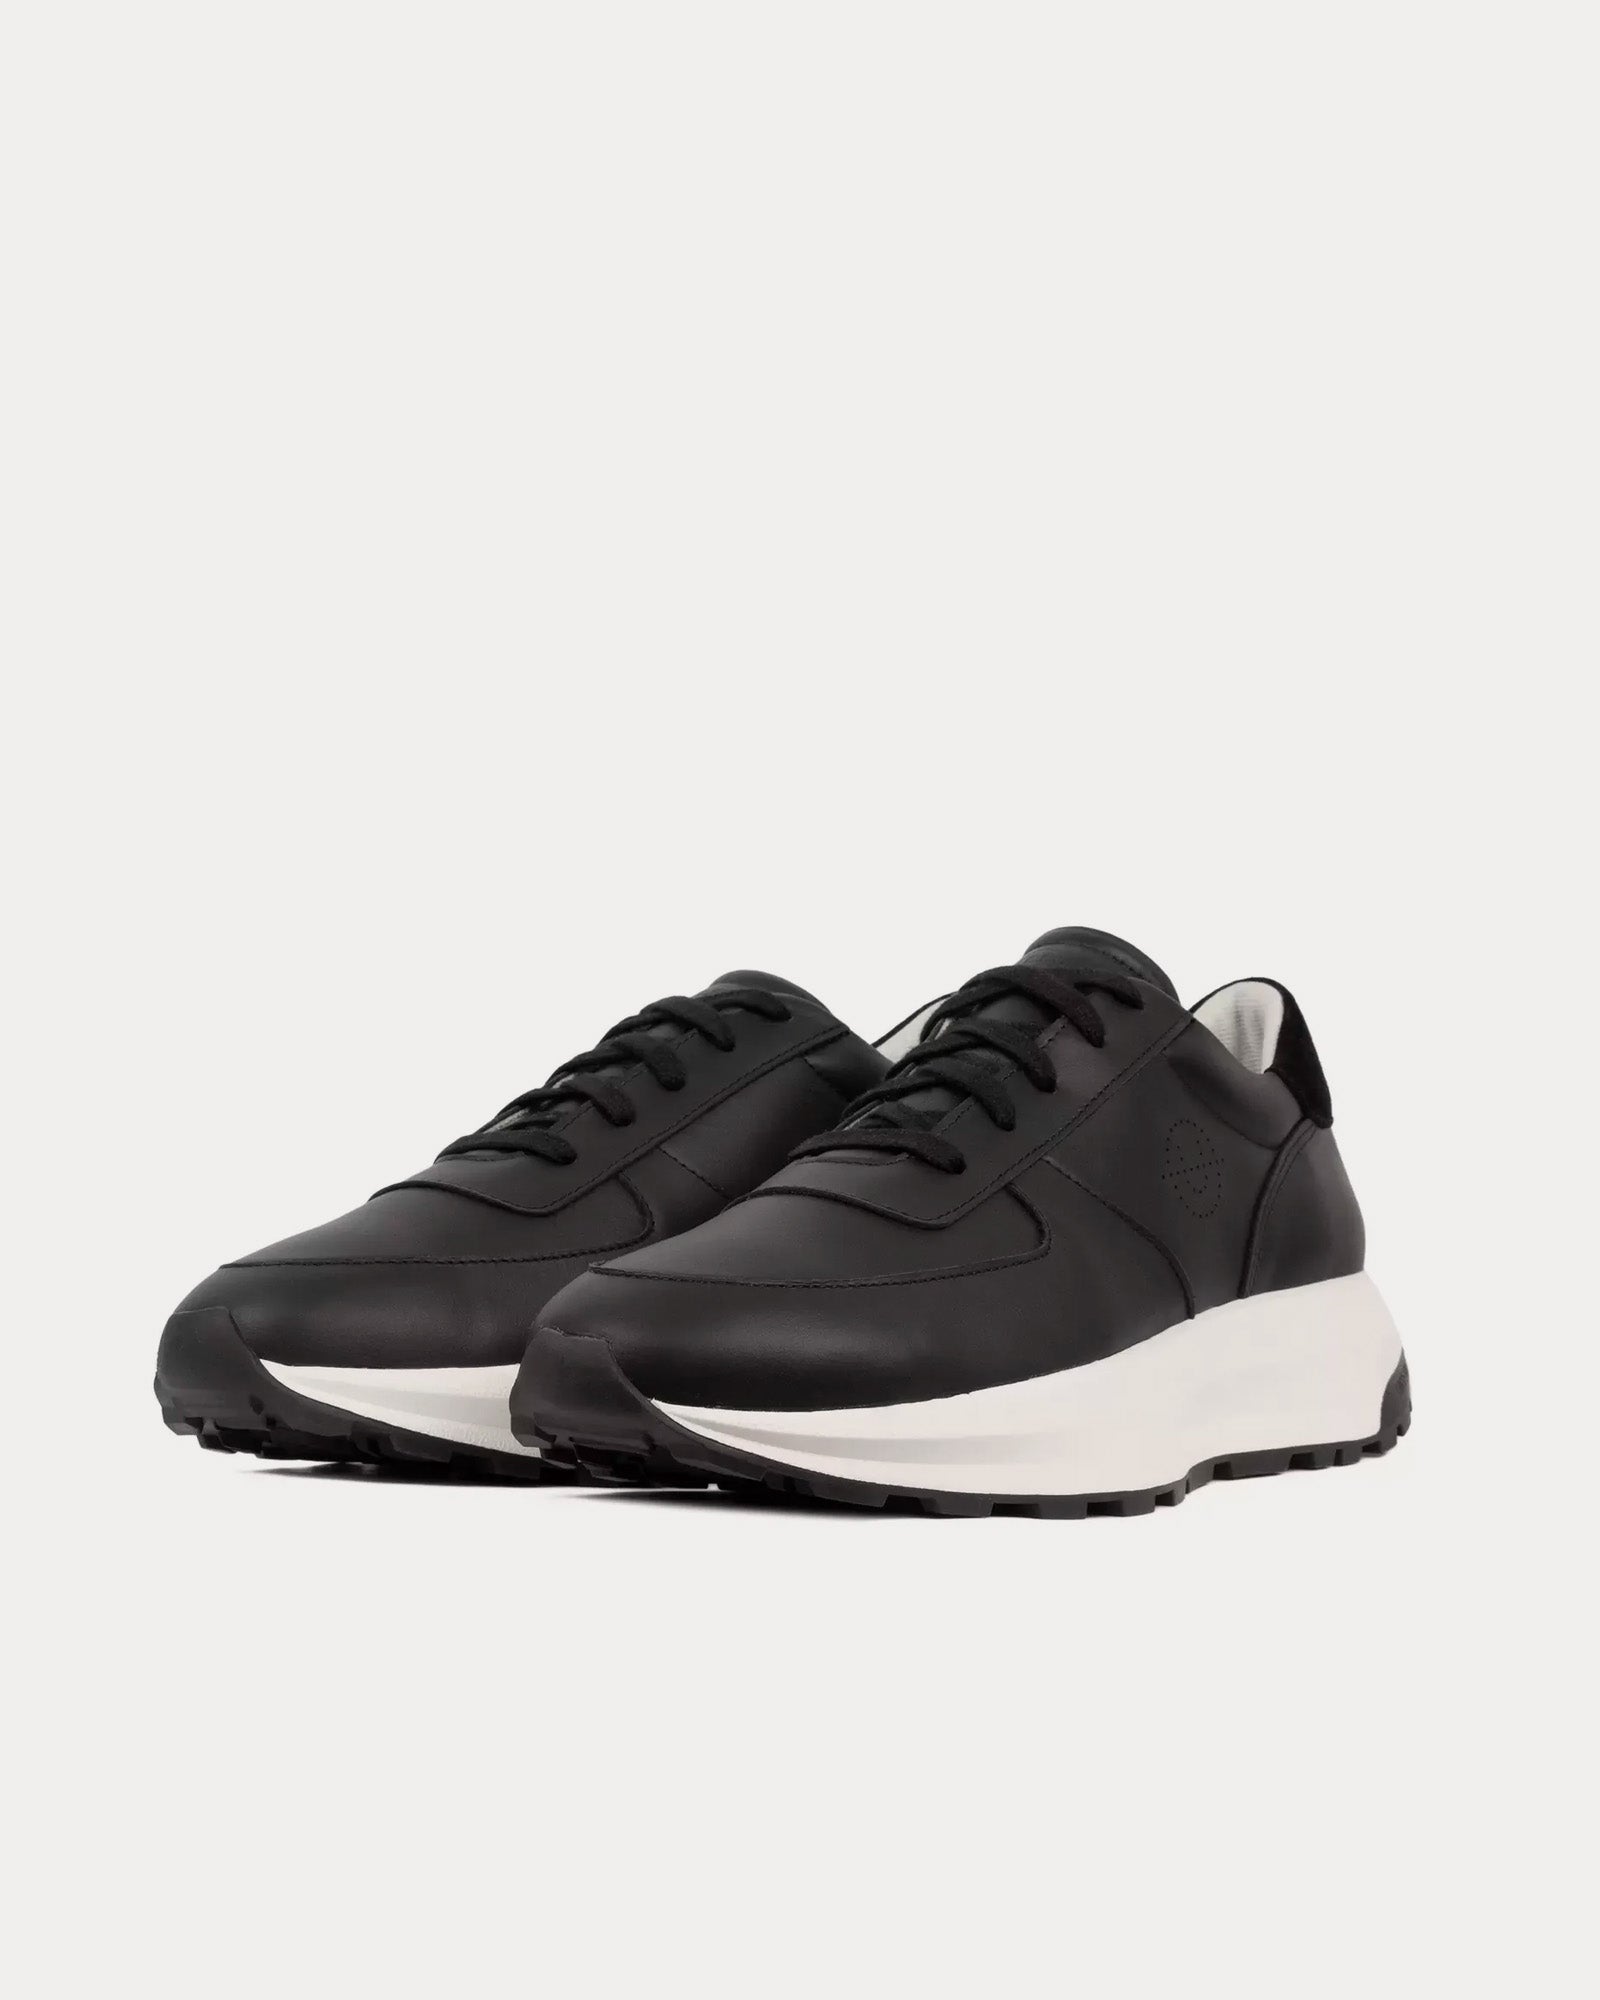 Unseen Footwear - Trinity Leather & Suede Black / White Low Top Sneakers